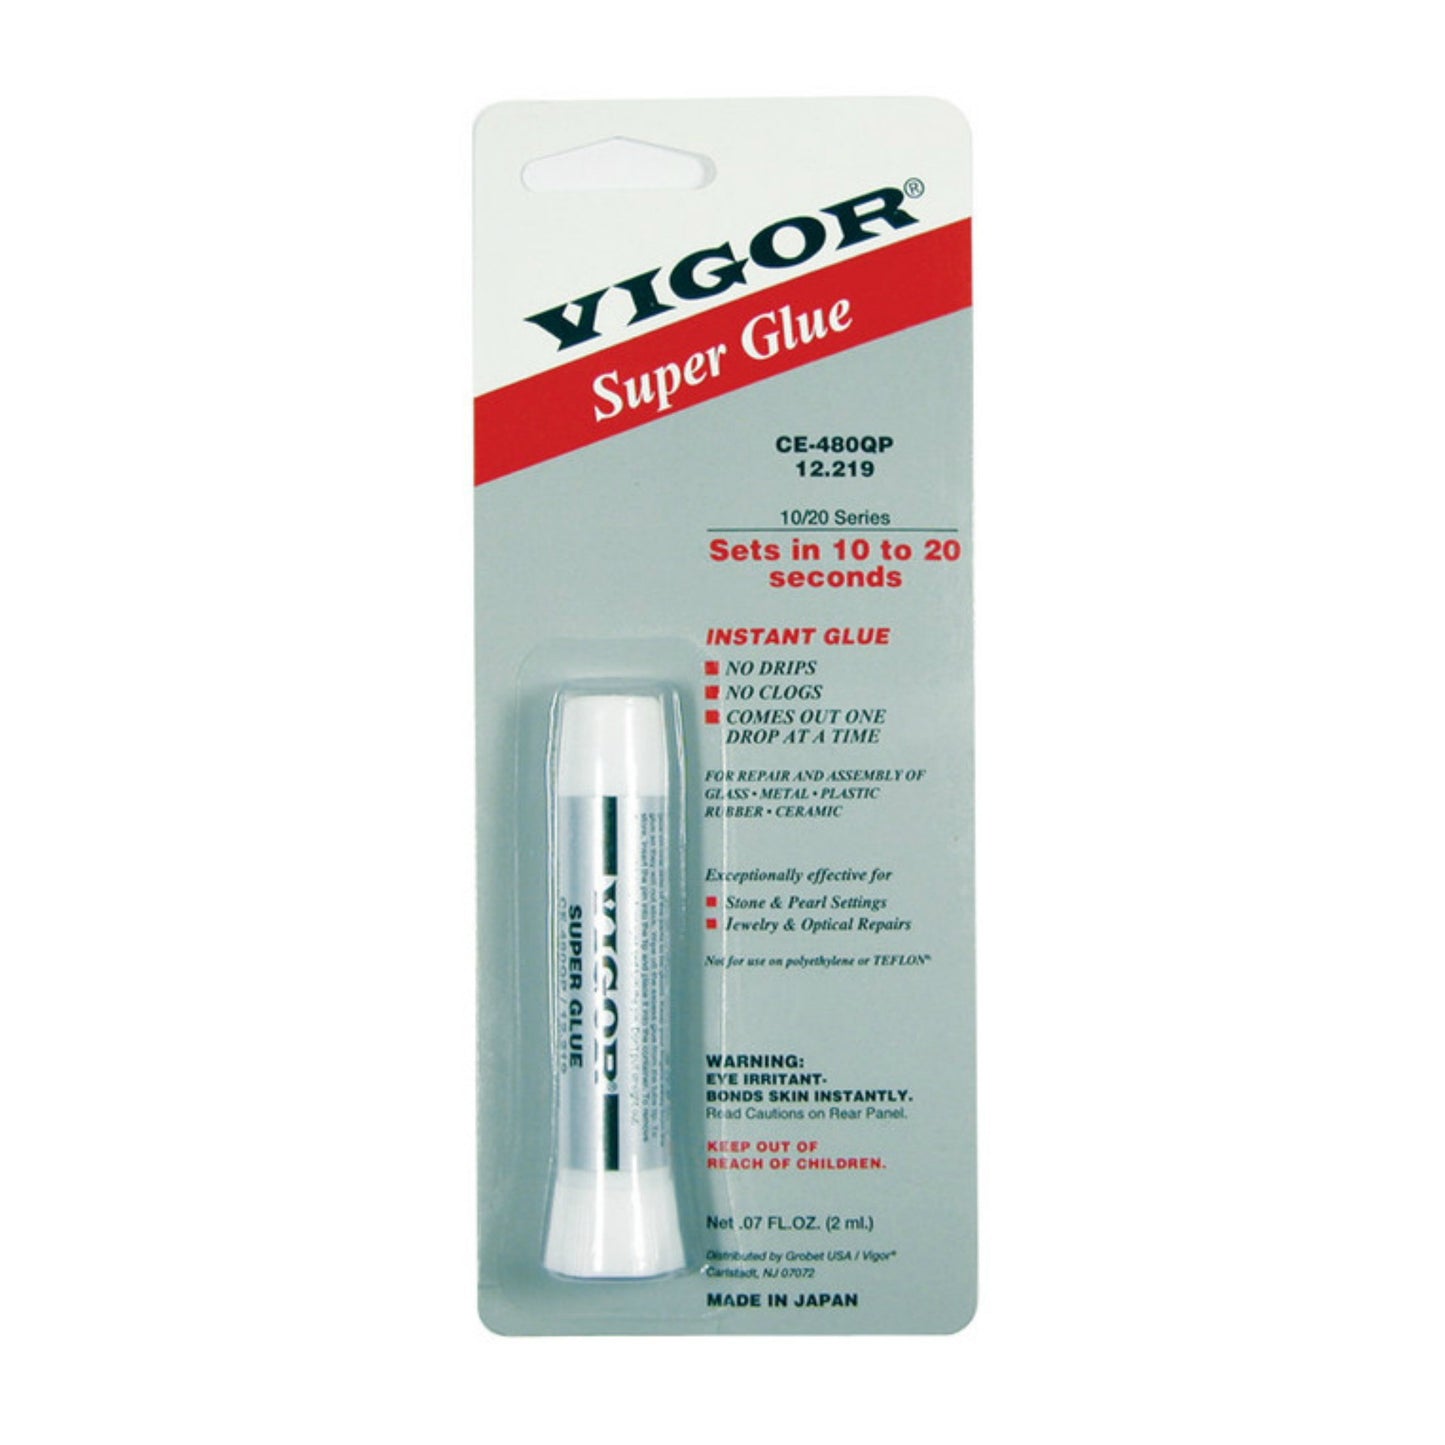 Vigor® Super Glue 10/20 - Pack of 5